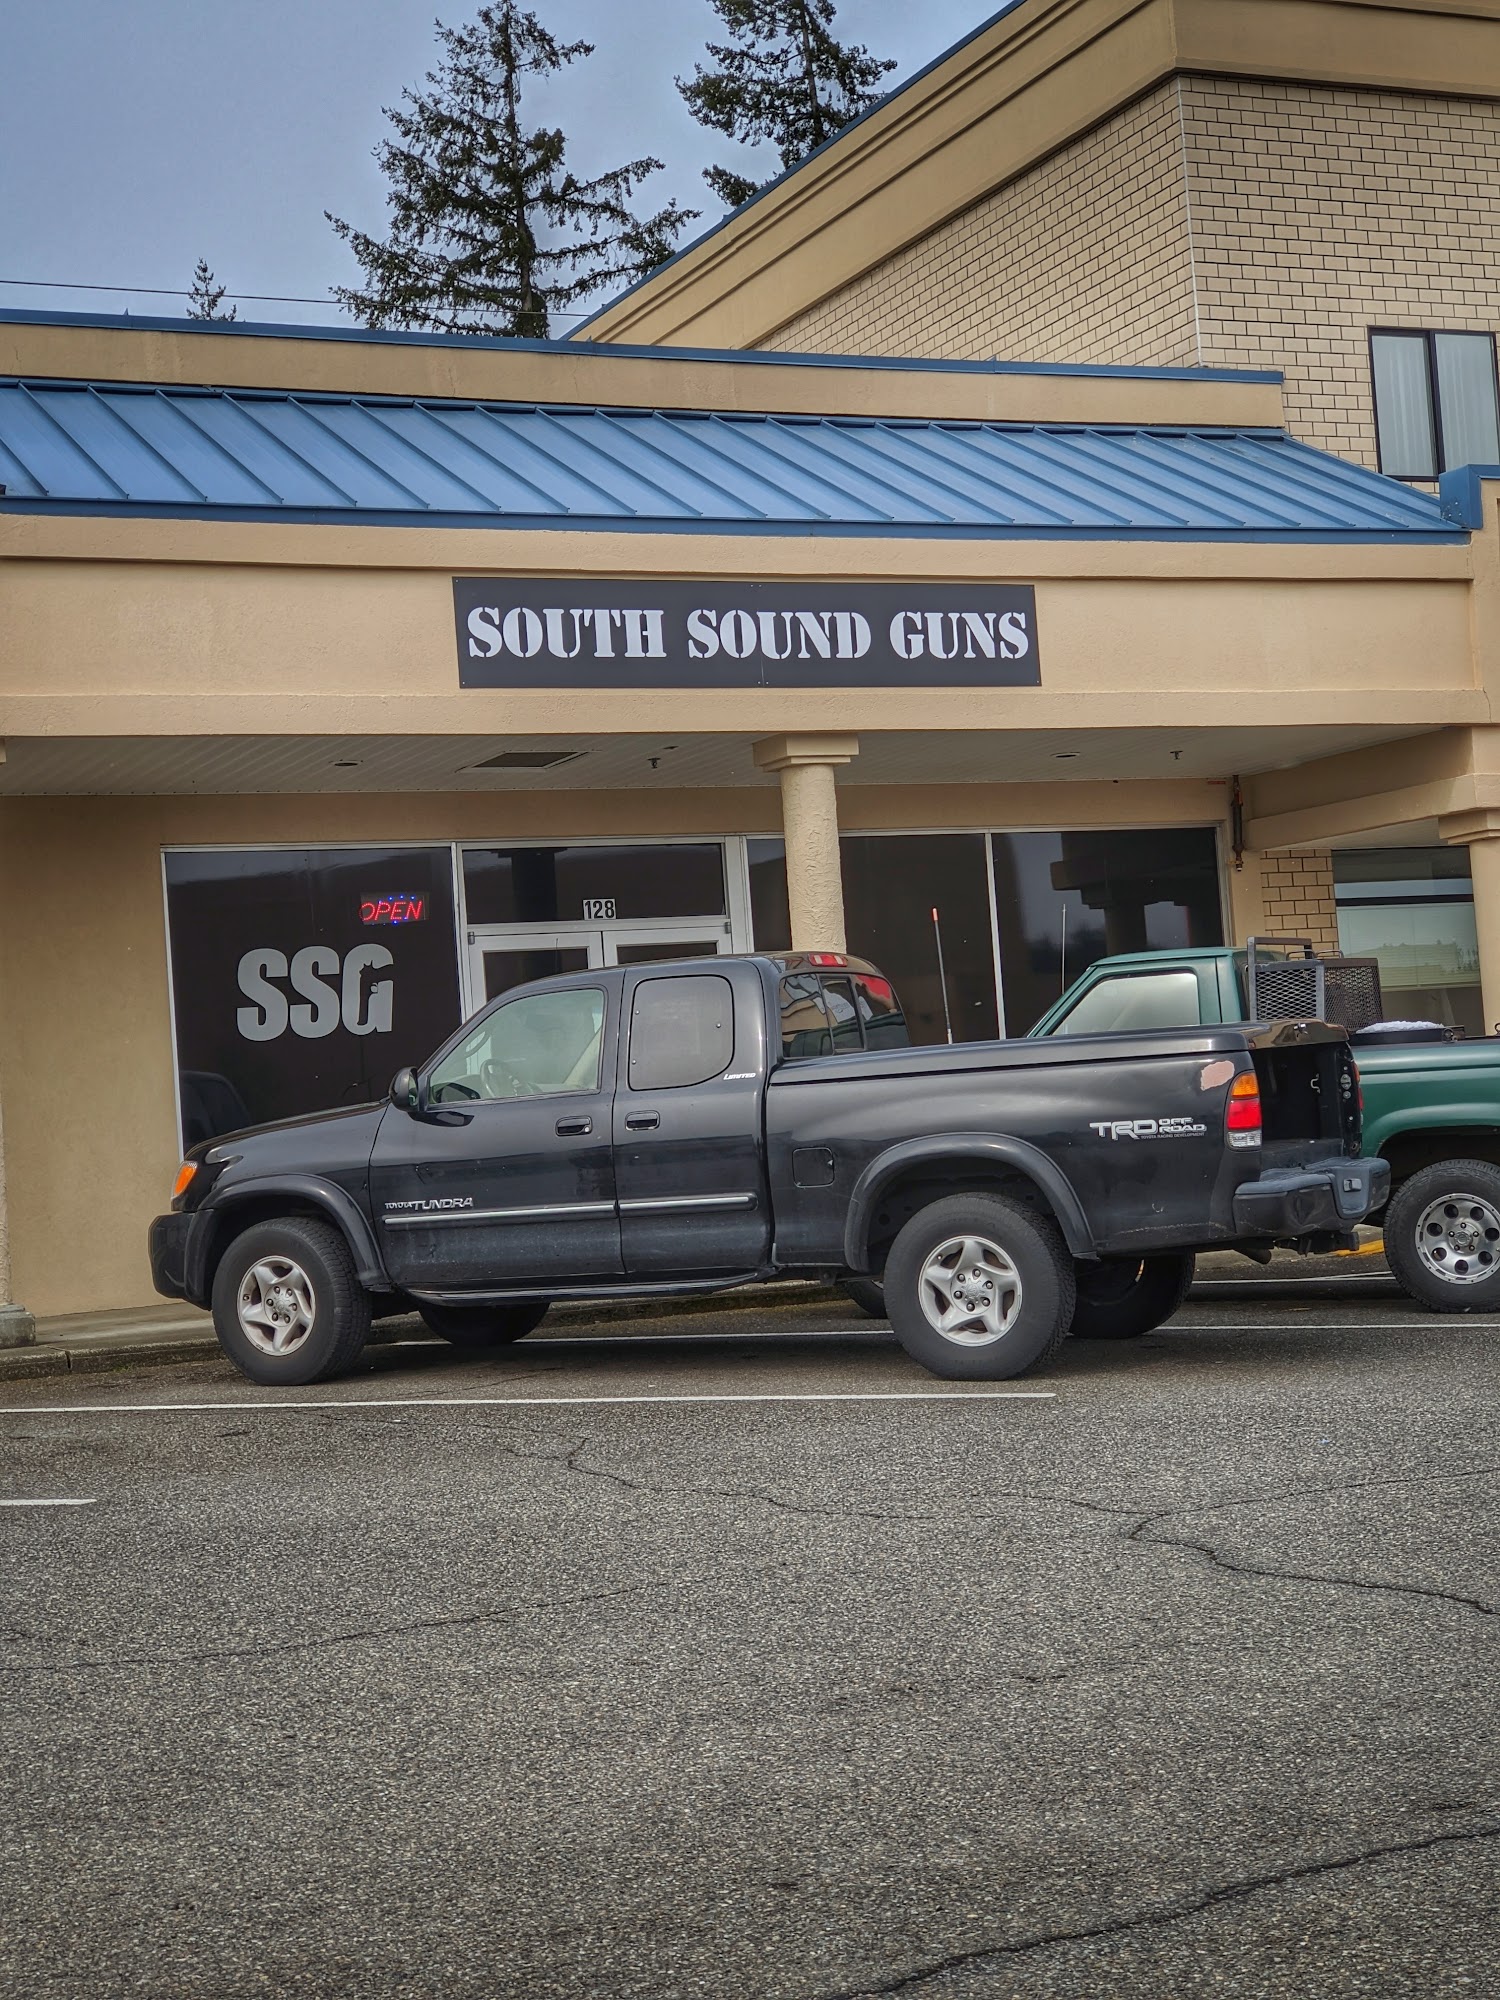 South Sound Guns (SSG)